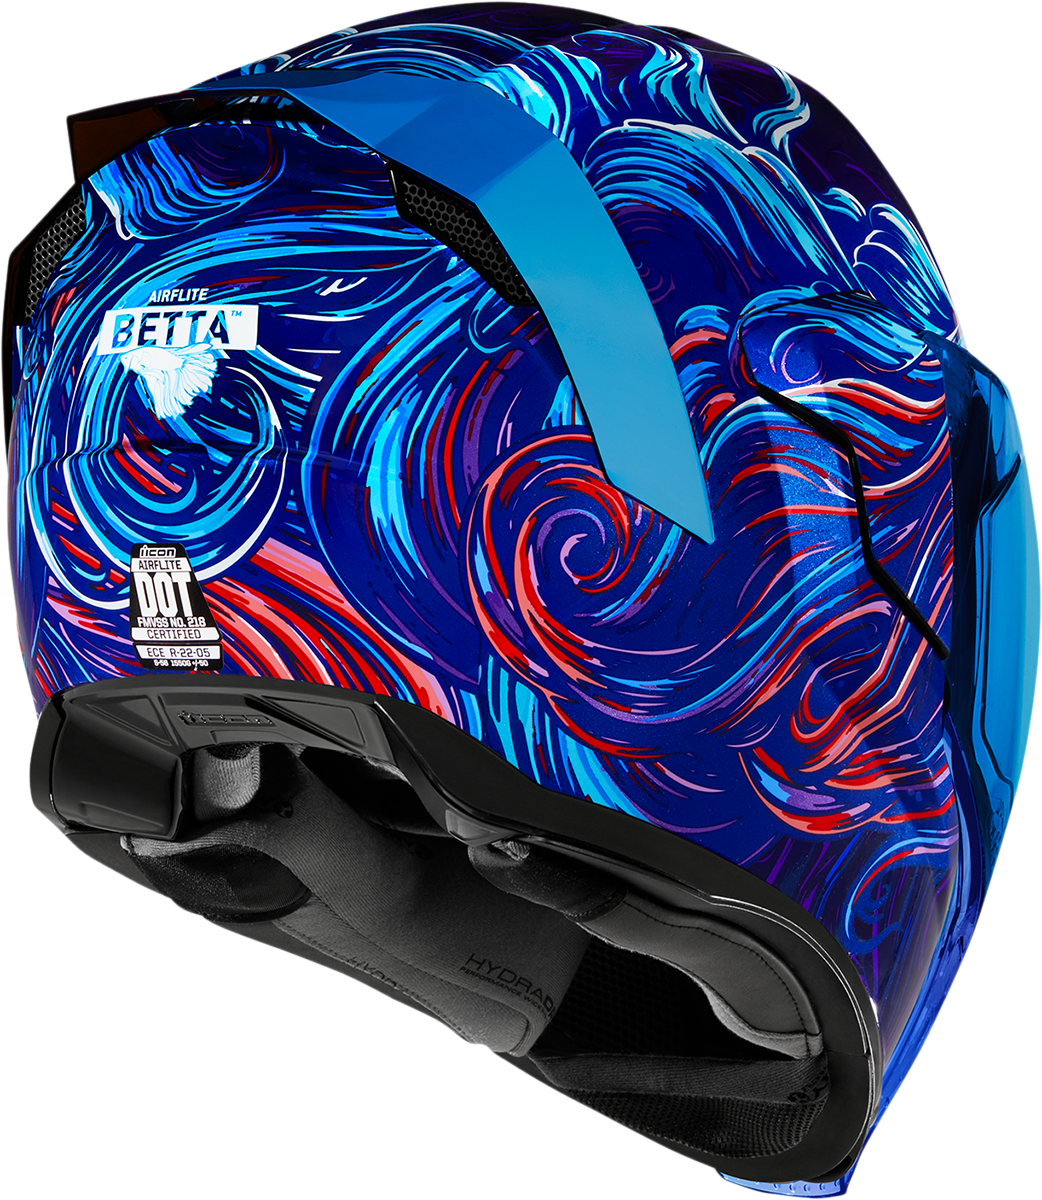 ICON Airflite* Helmet - Betta - Blue - 2XL 0101-14711